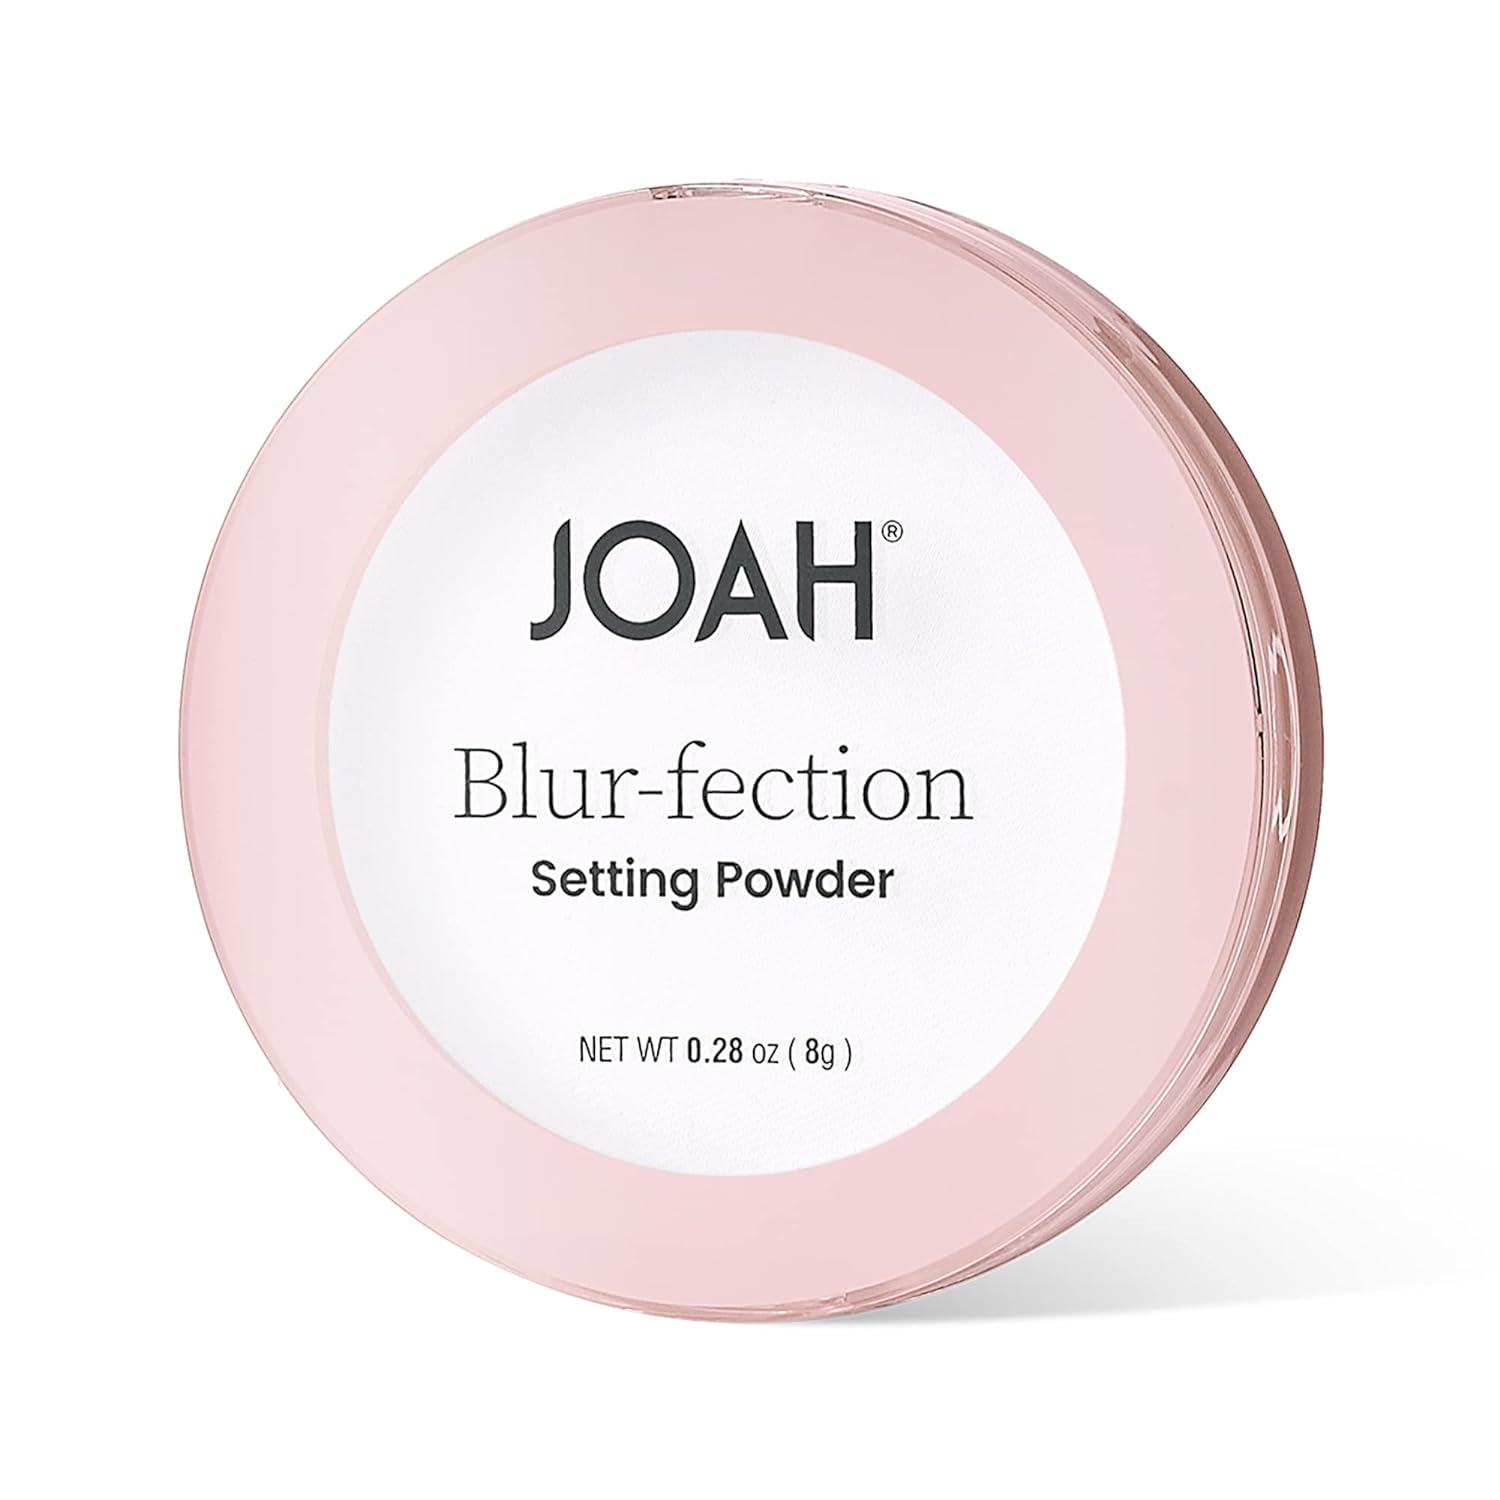 JOAH Blur-Fection Setting Powder, Weightless, Translucent Powder, All Skin Types and Tones, Sheer Shine-Free Finish, Net Wt. 0.28 . (8g)